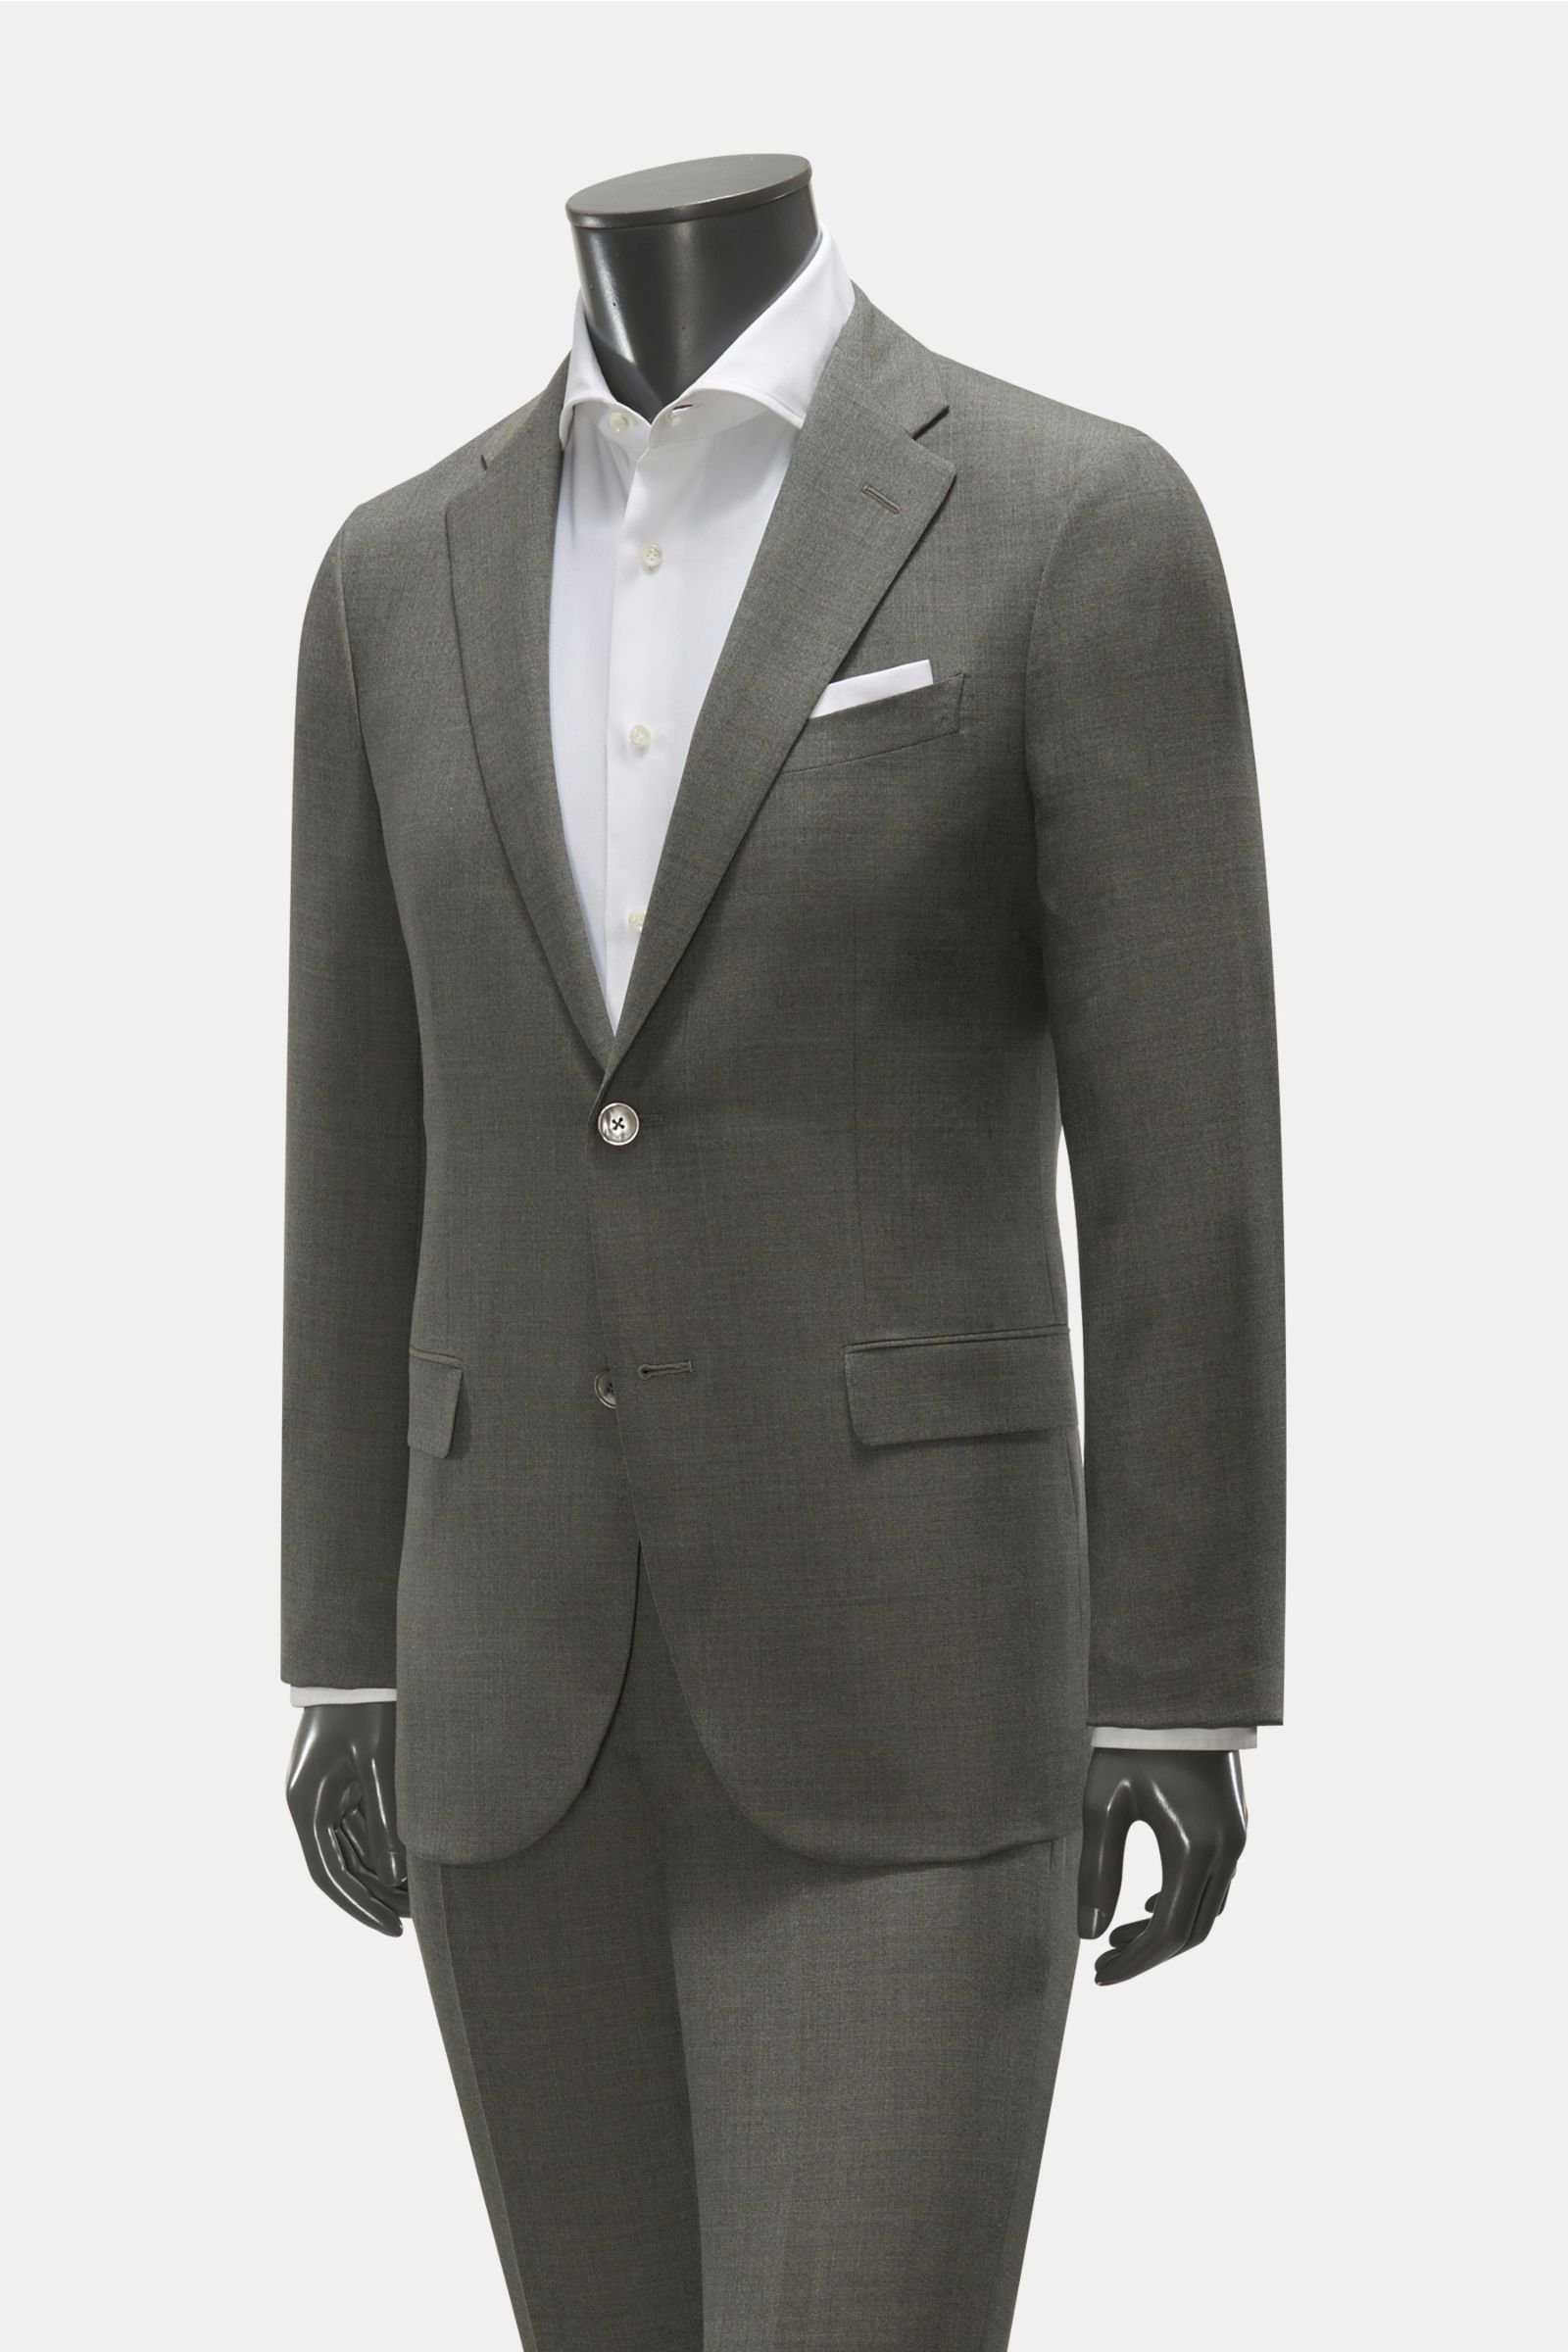 Suit grey-green